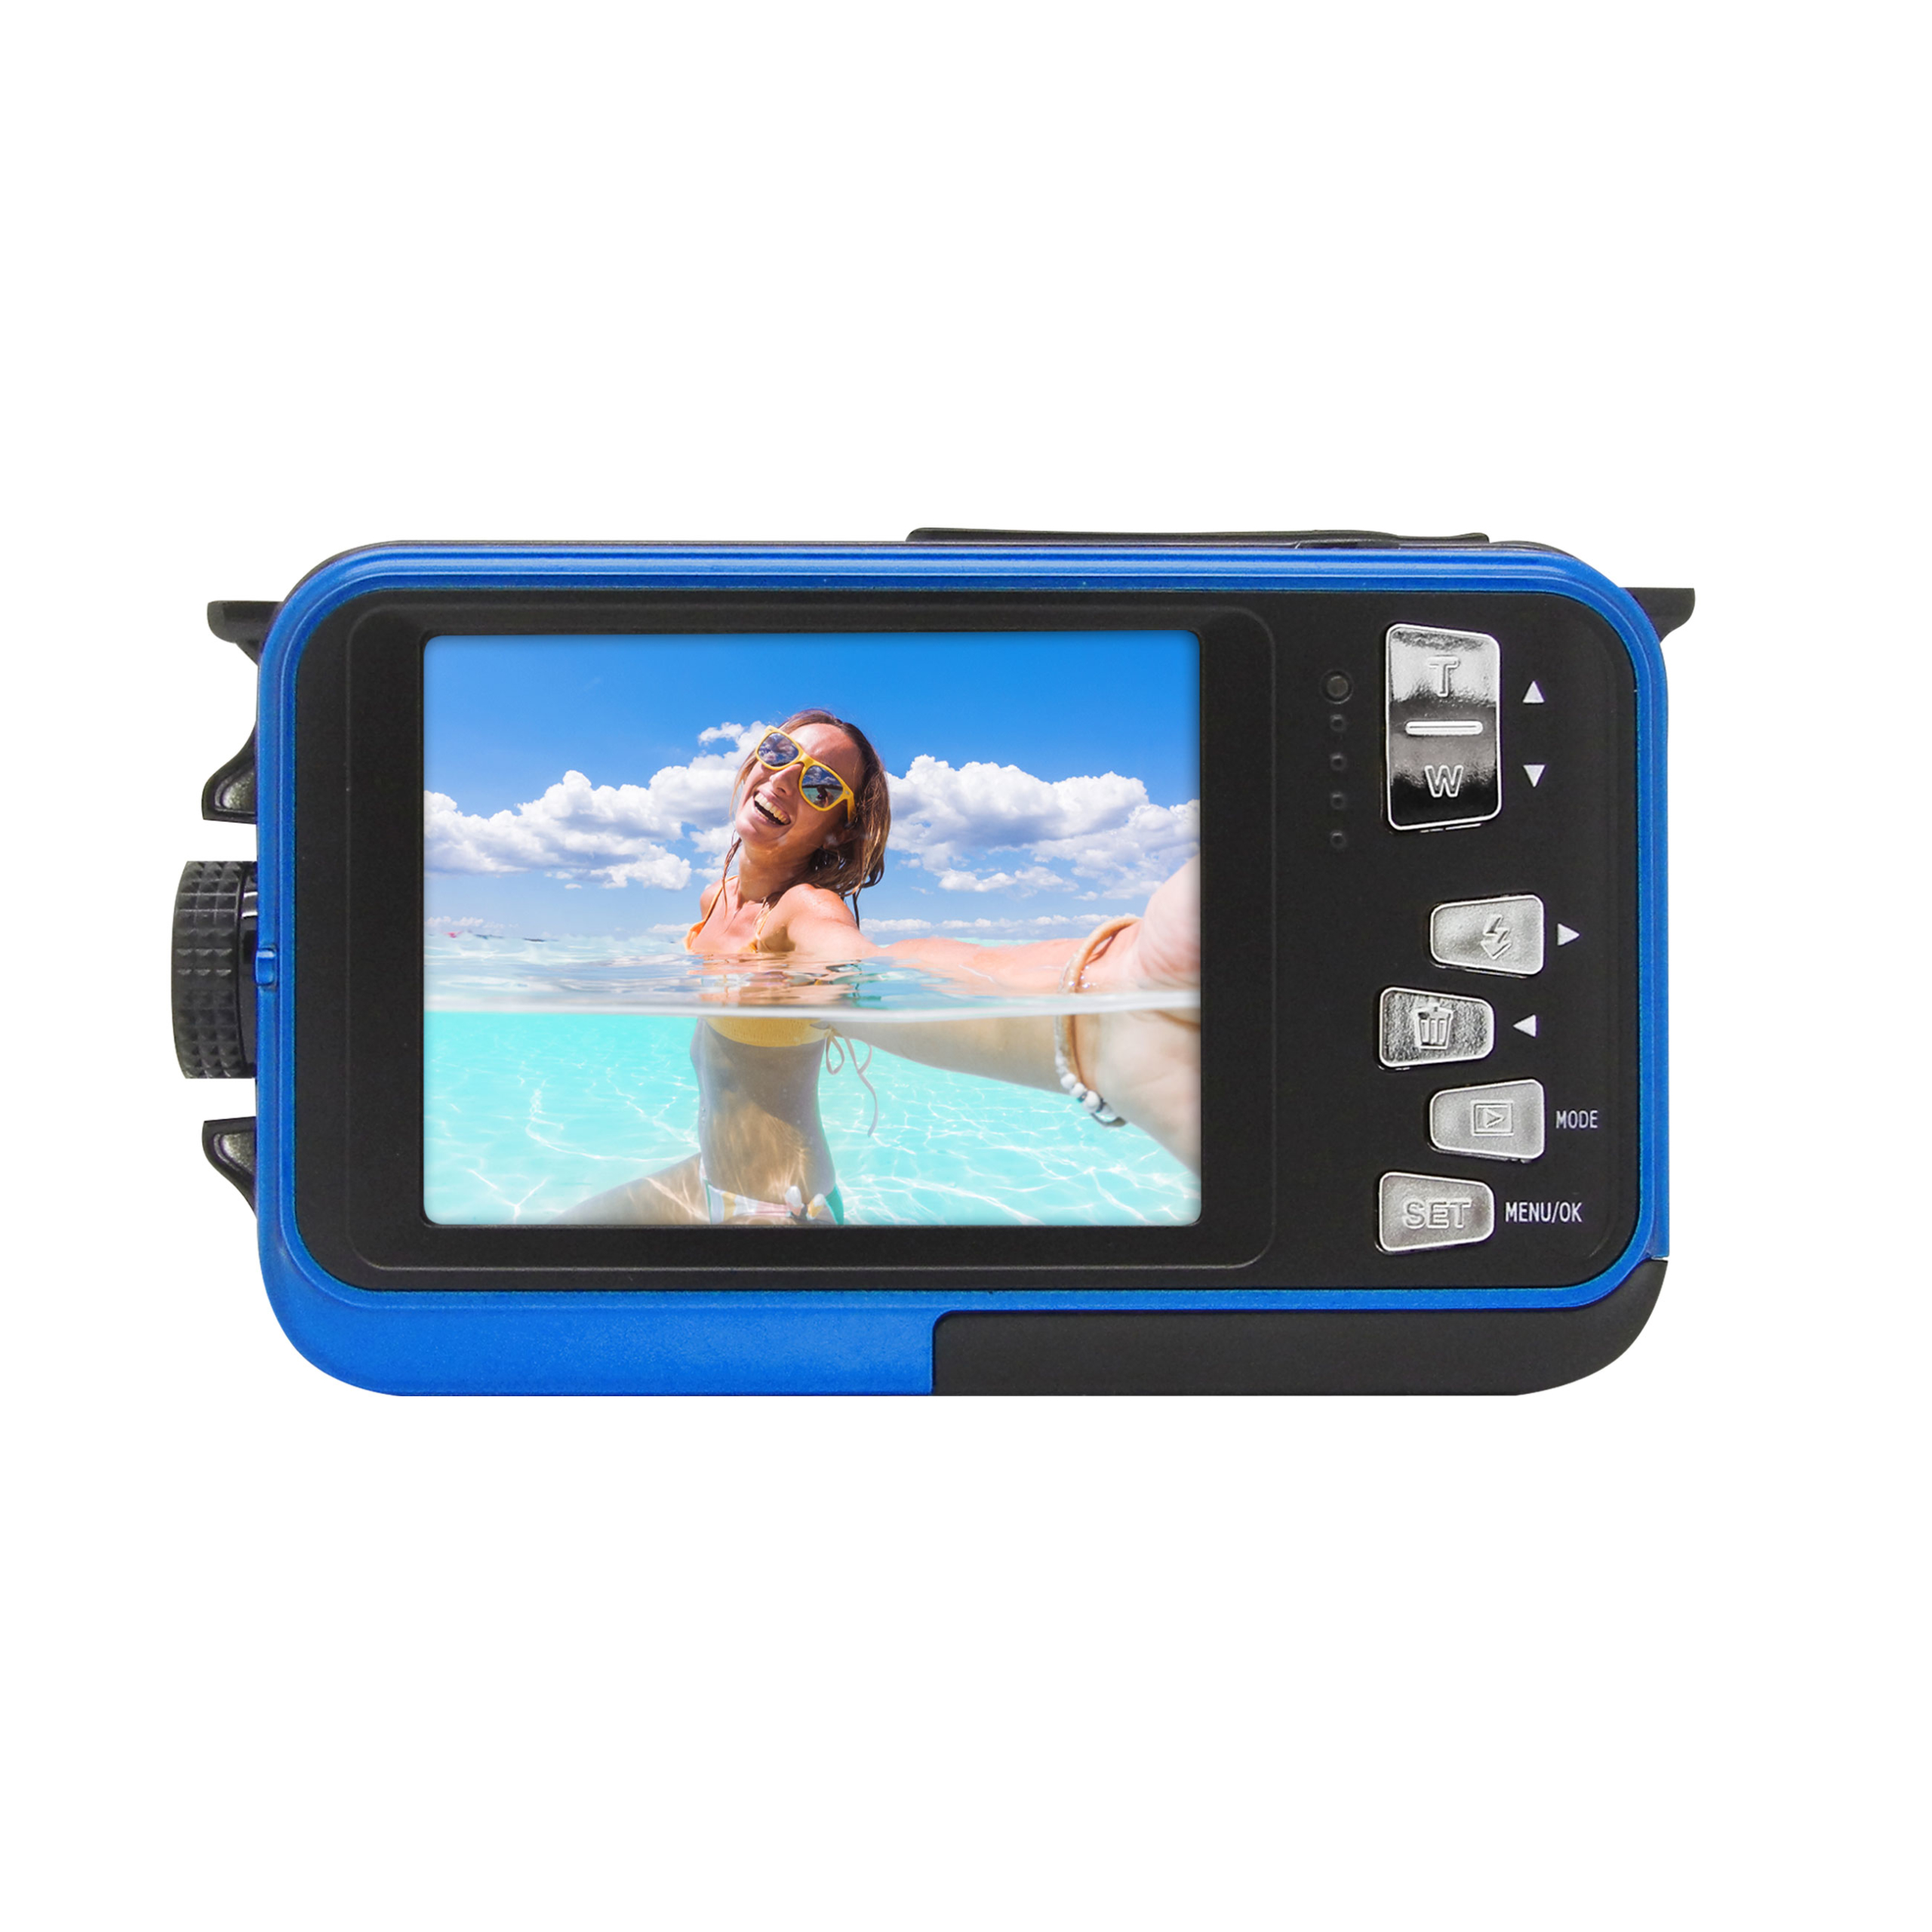 Aquapix W3027 Wave underwater camera